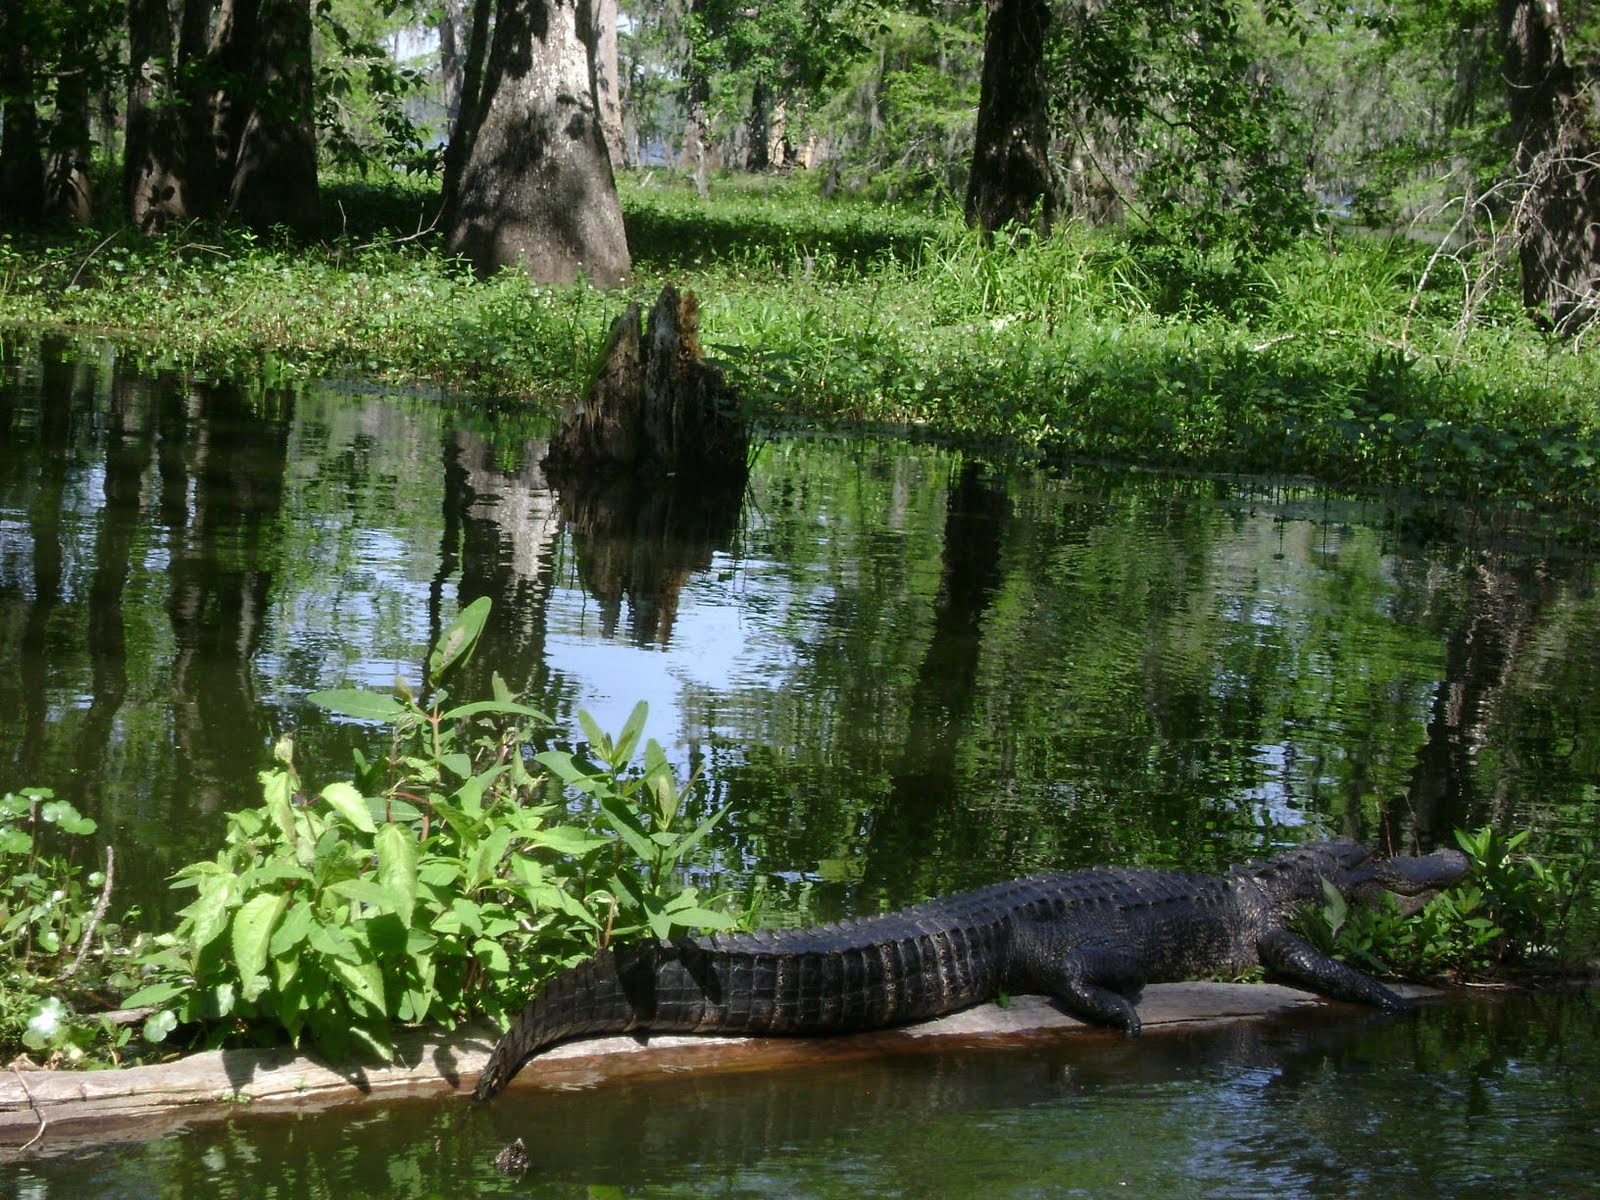 Louisiana Swamp Alligator